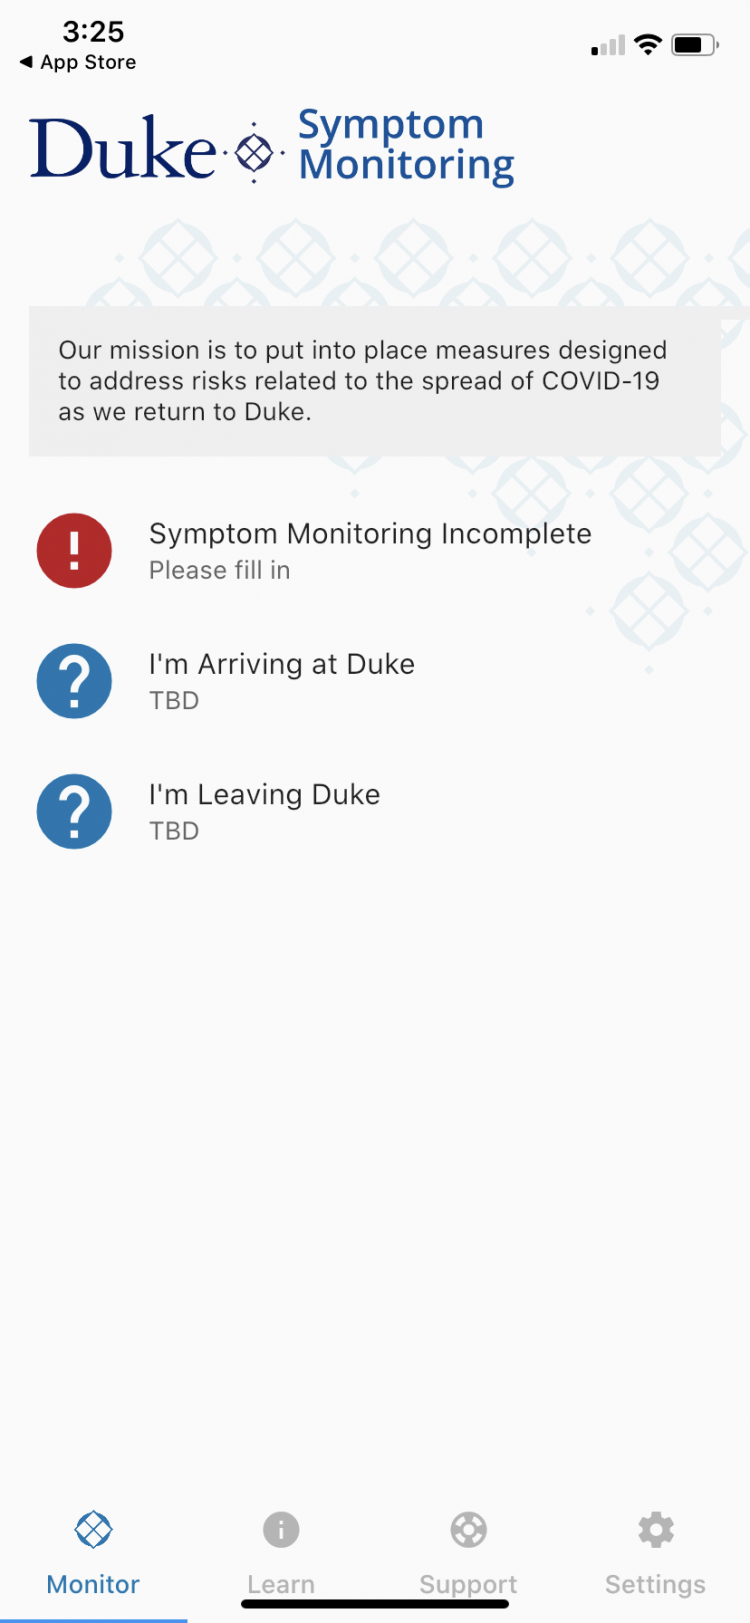 Duke's symptom-monitoring form asks Duke community members to report any COVID-19 symptoms.